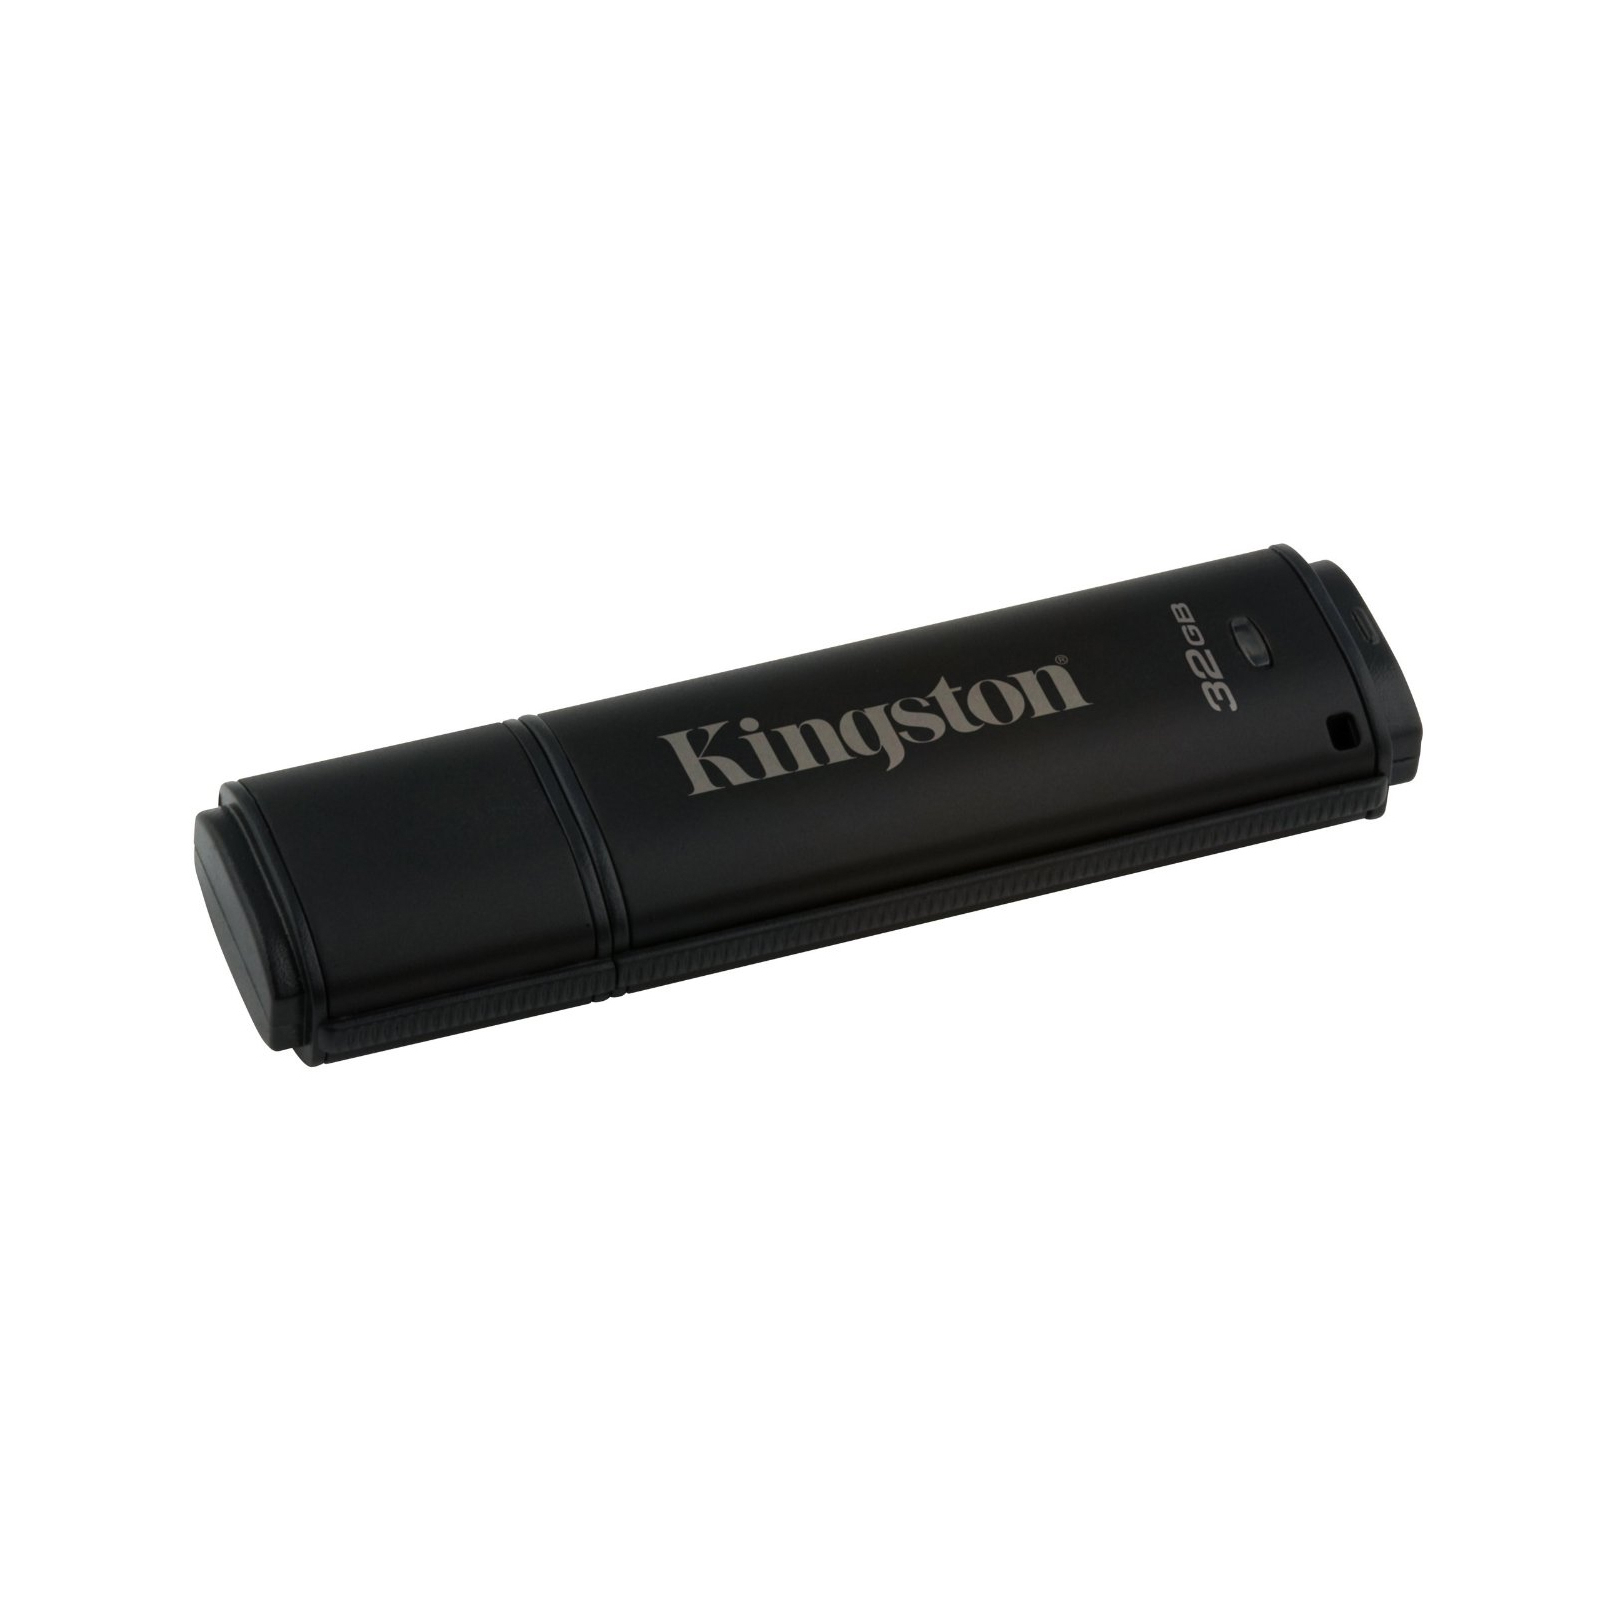 USB флеш накопитель Kingston 32GB DataTraveler 4000 G2 Metal Black USB 3.0 (DT4000G2/32GB) изображение 2